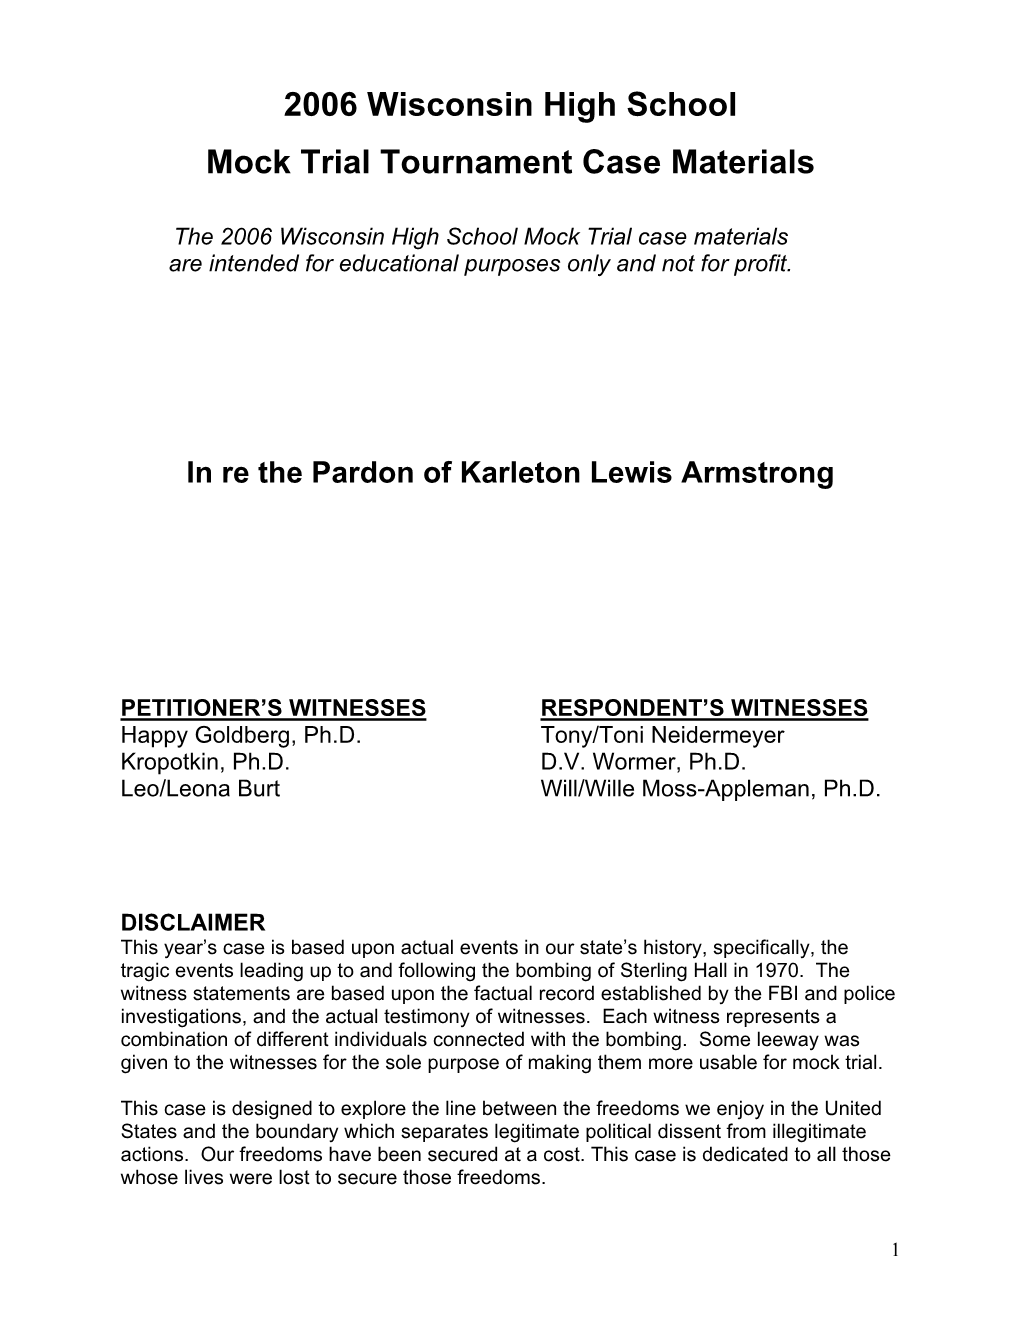 2006 Wisconsin High School Mock Trial Tournament Case Materials